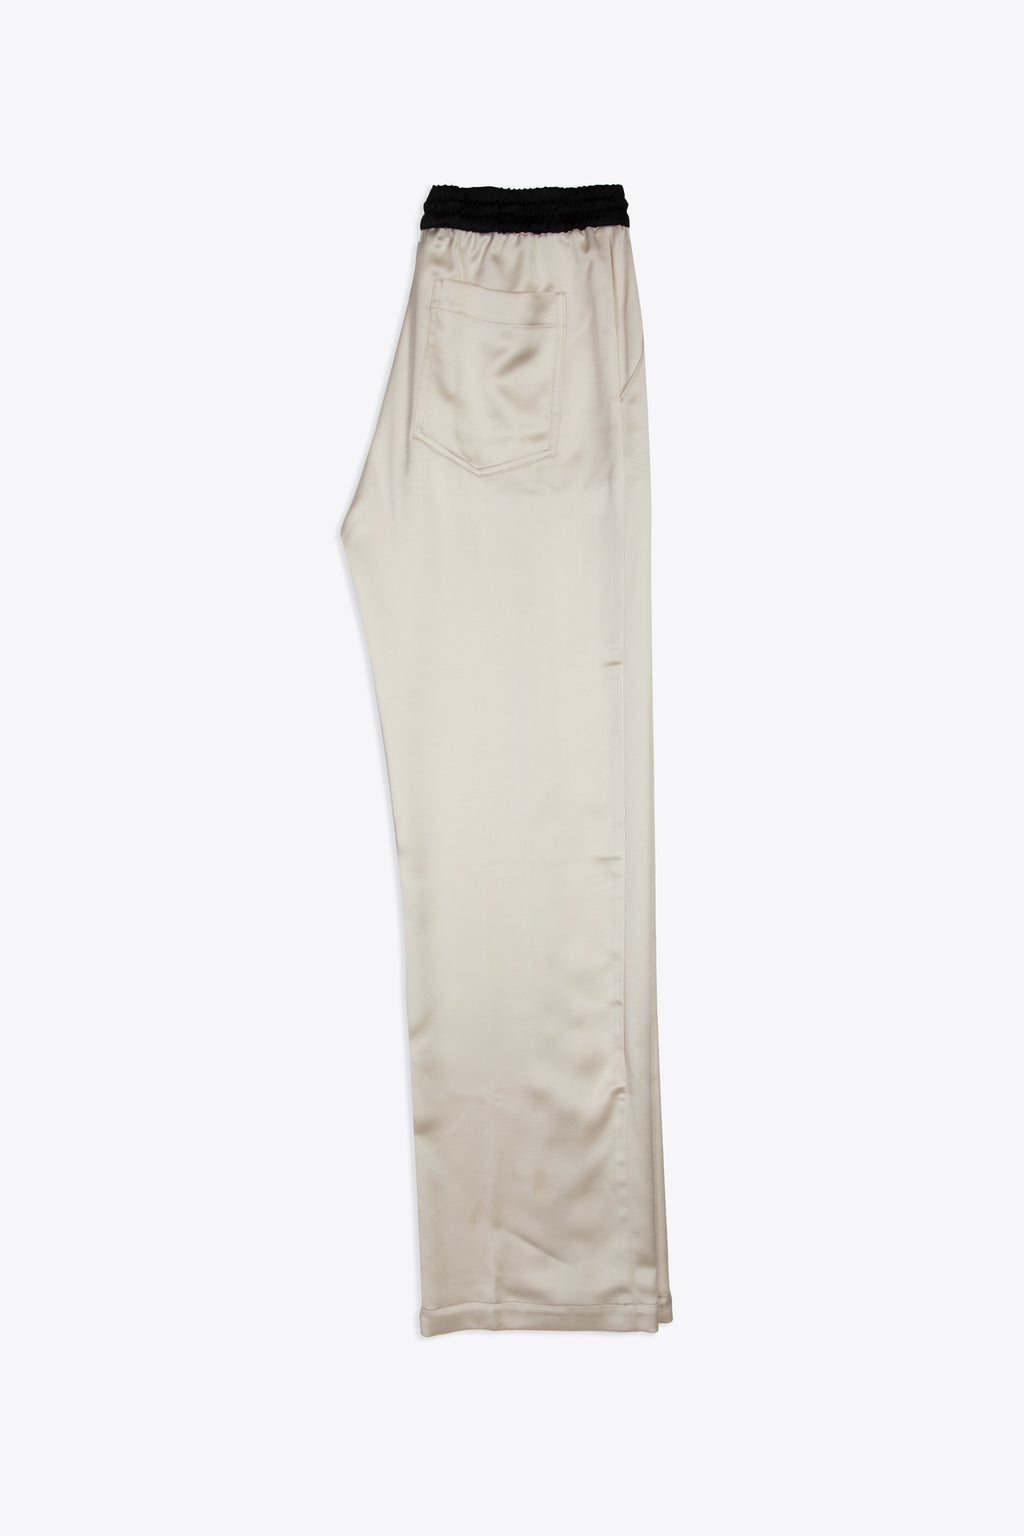 alt-image__Champagne-coloured-satin-pajama-pant-with-elastic-waistband